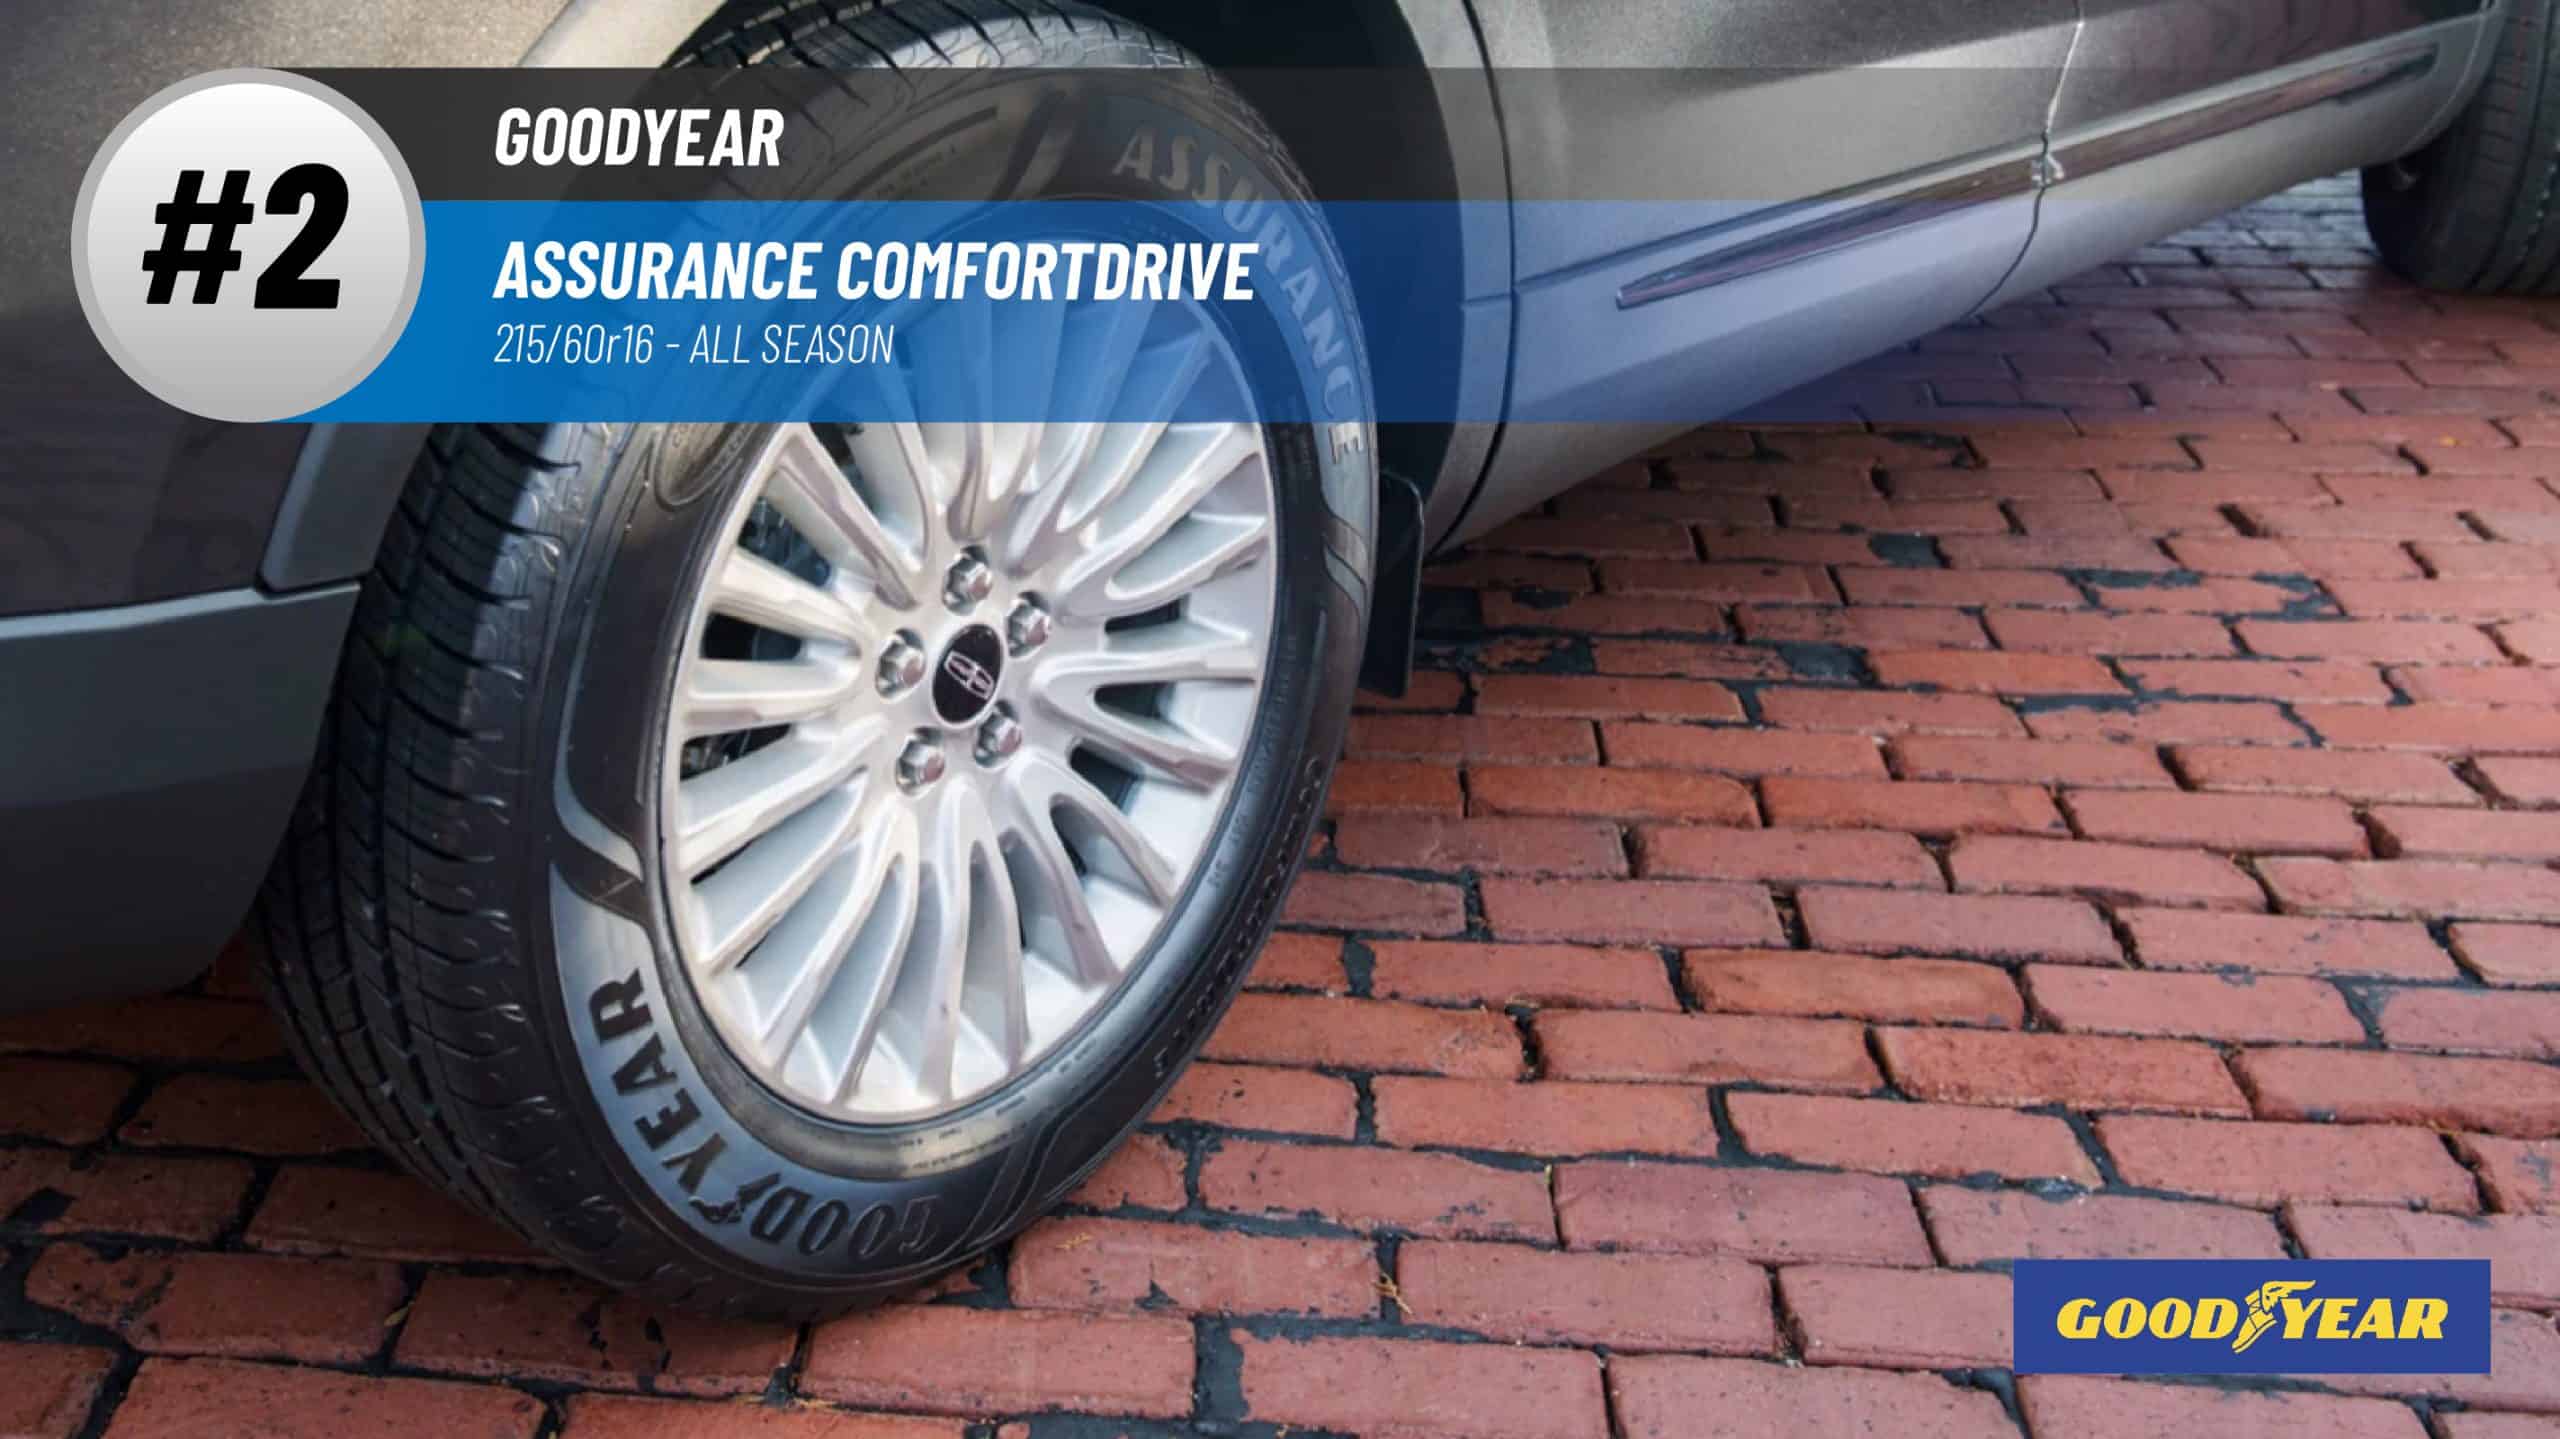 Top #2 All Season Tires: Goodyear Assurance Comfortdrive – 215/60r16